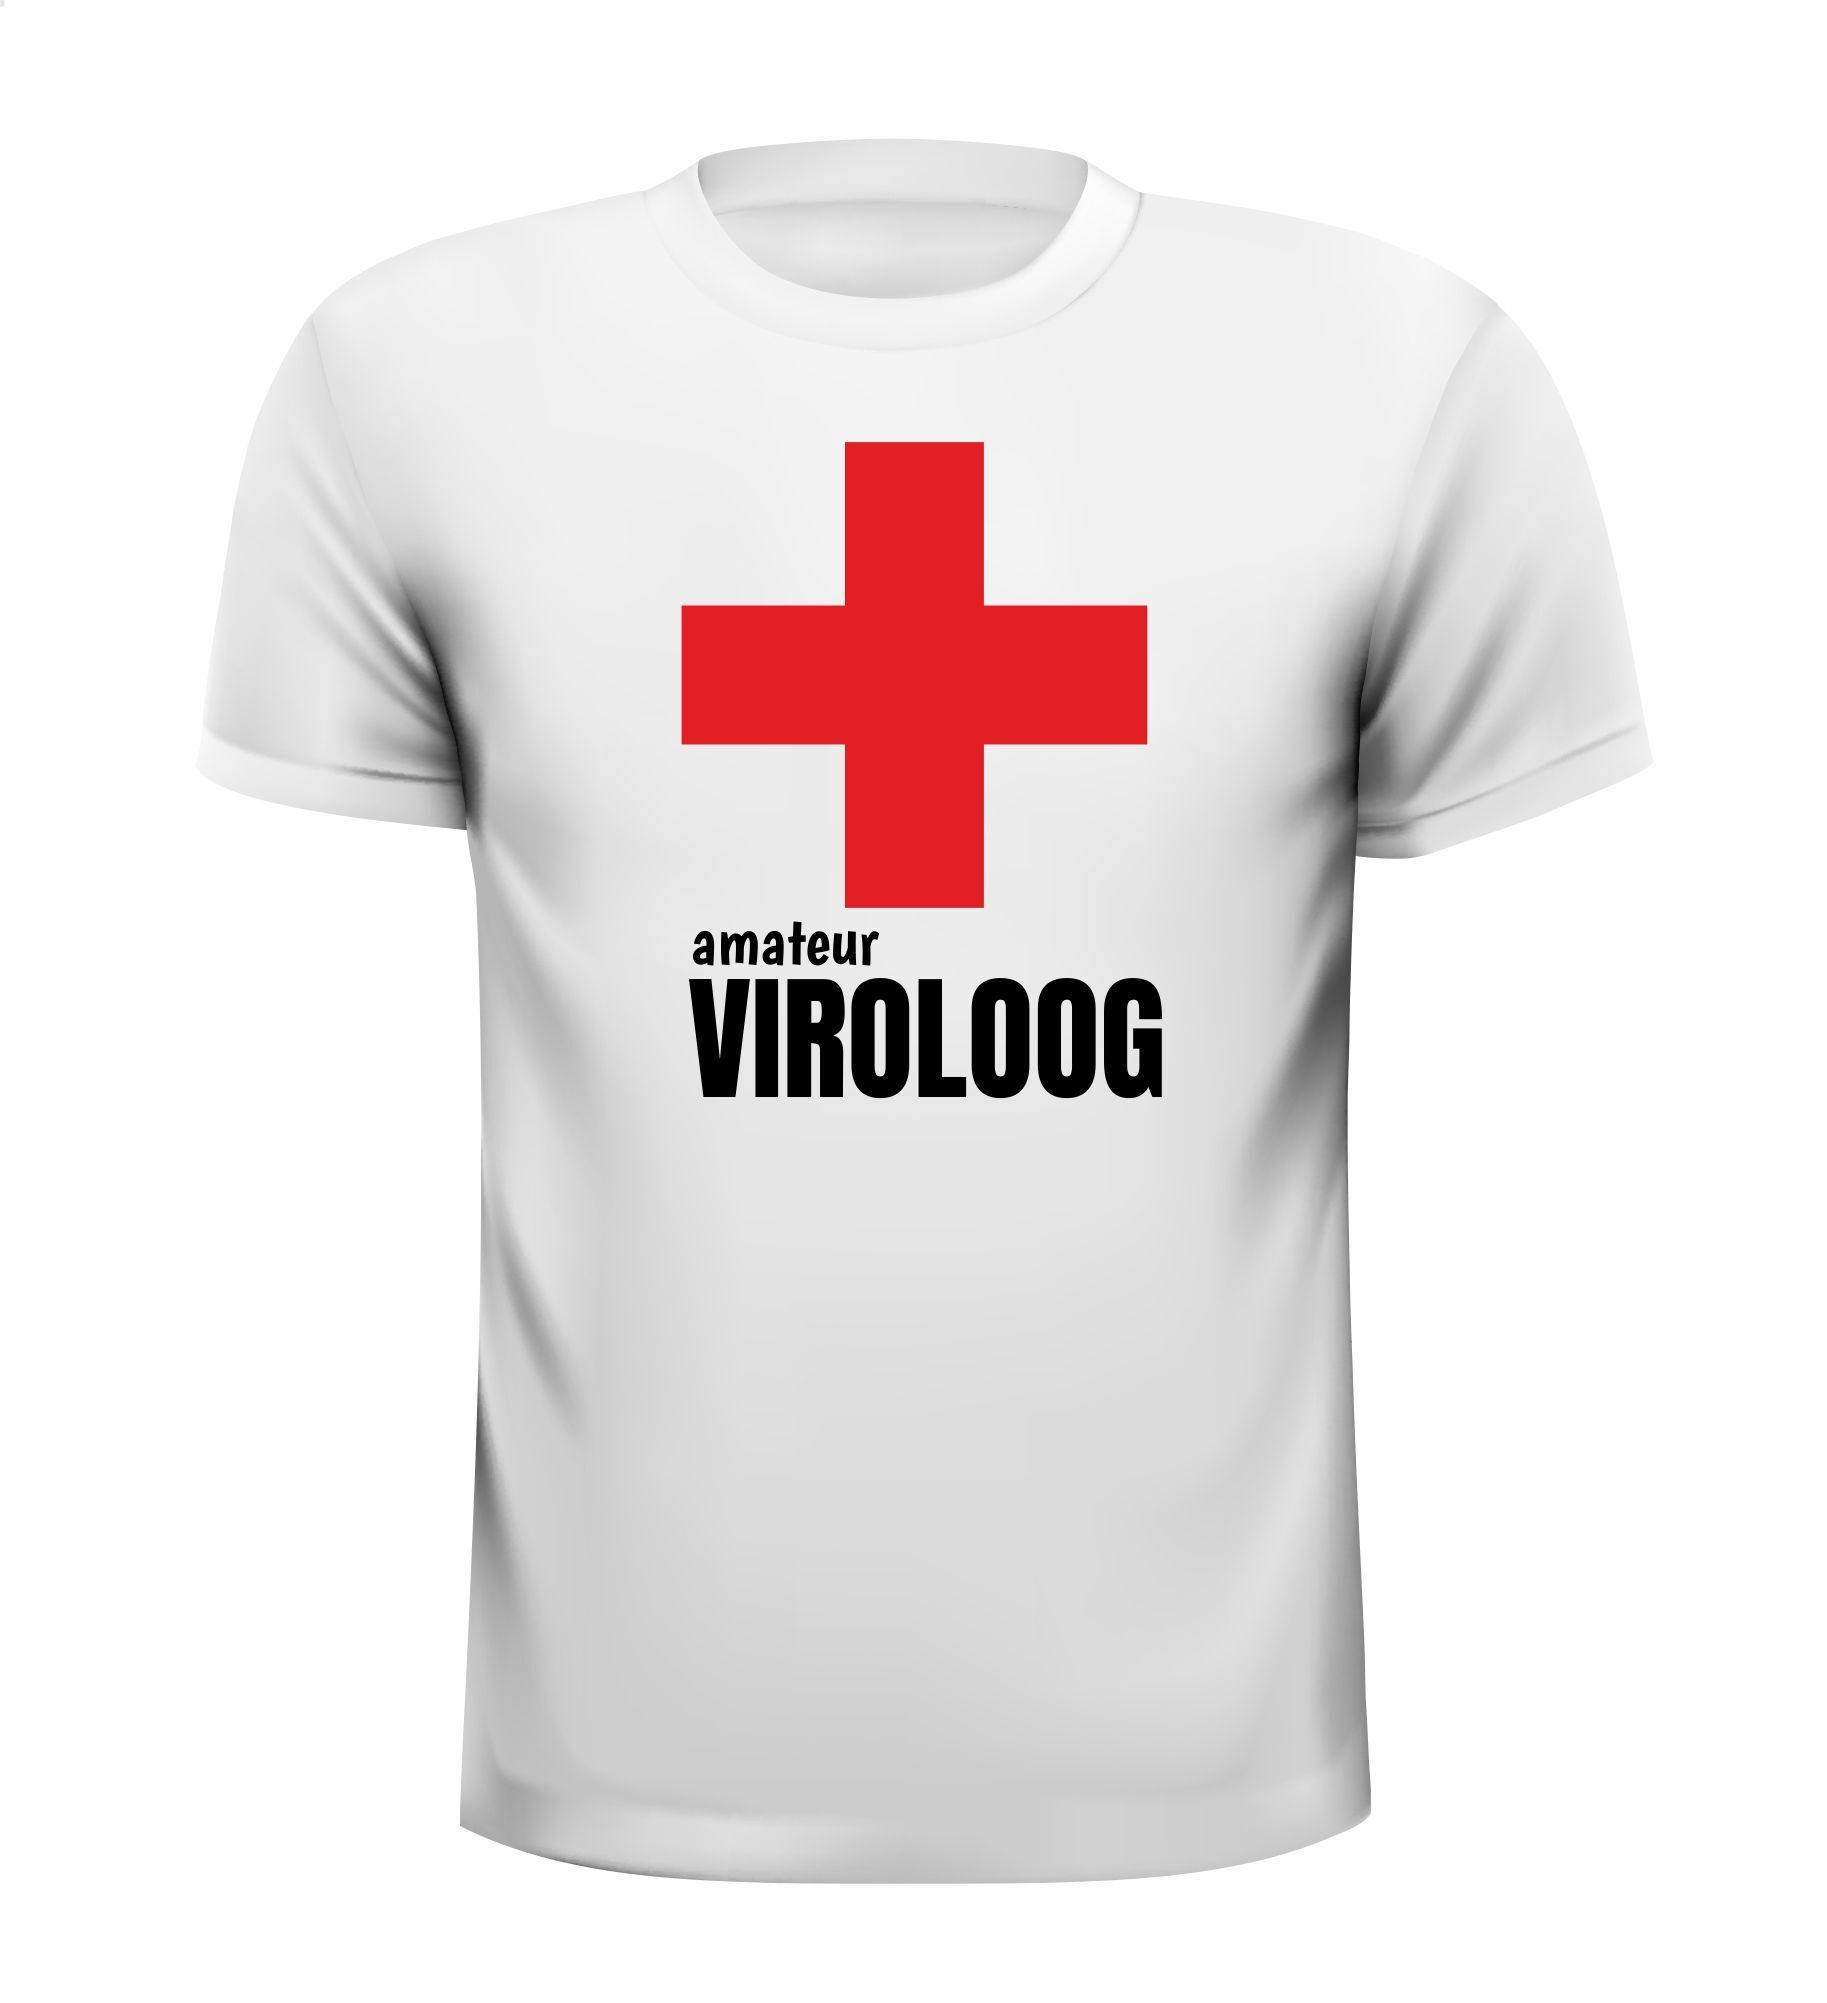 amateur viroloog T-shirt